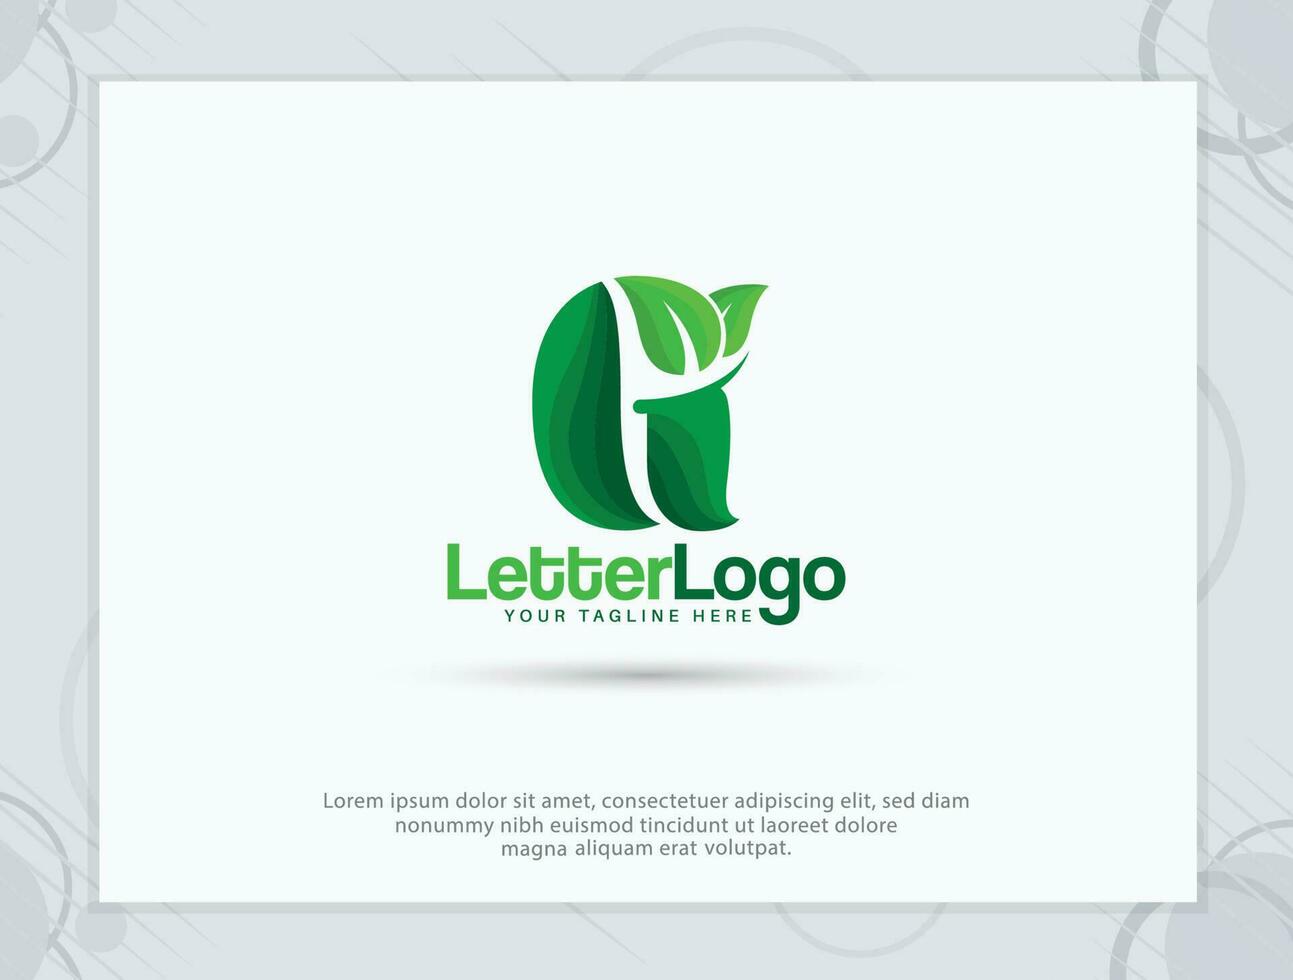 gi lettera logo design vettore